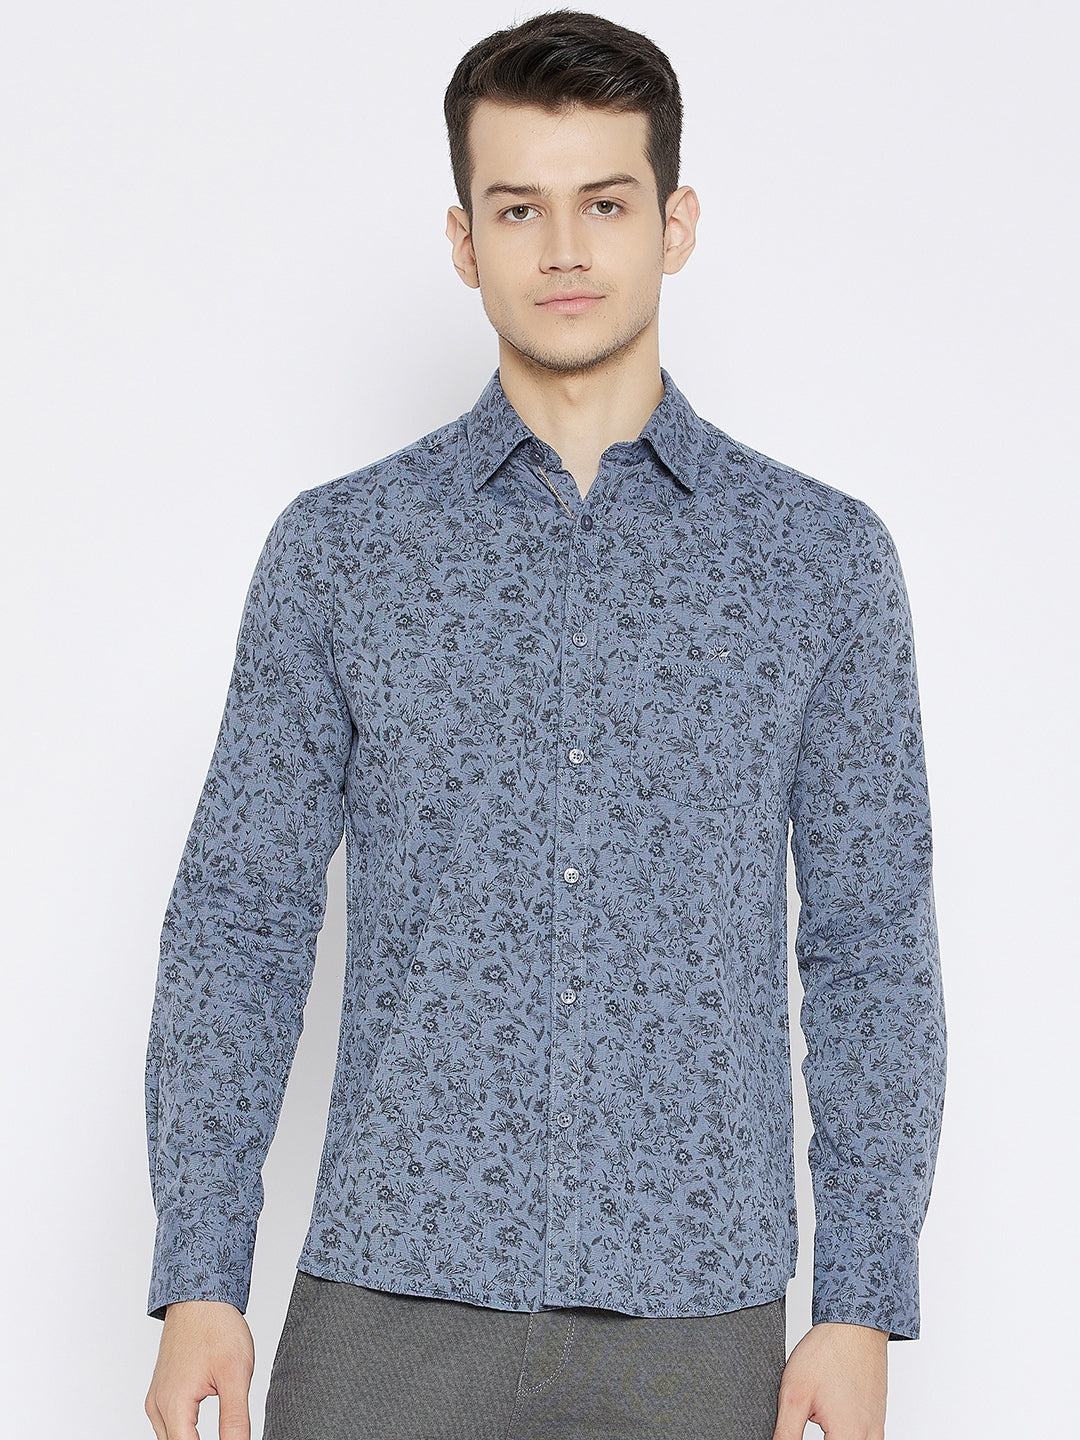 Blue Floral Printed Slim Fit shirt - Men Shirts